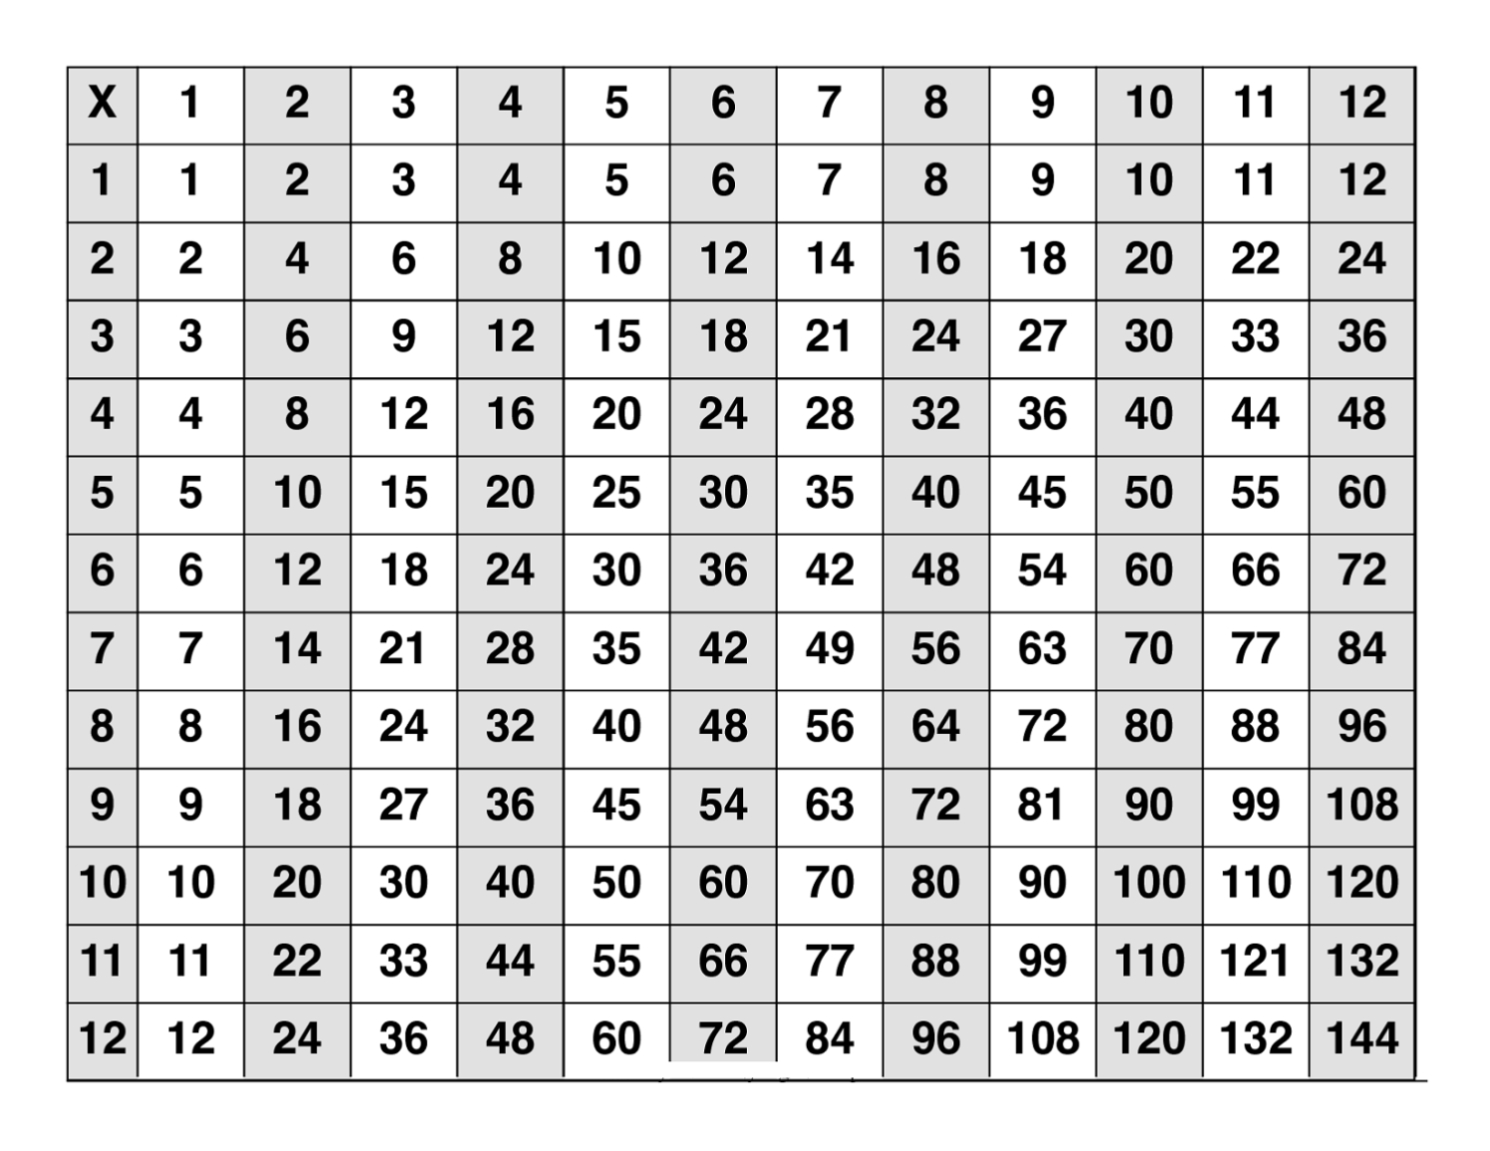 12-printable-multiplication-table